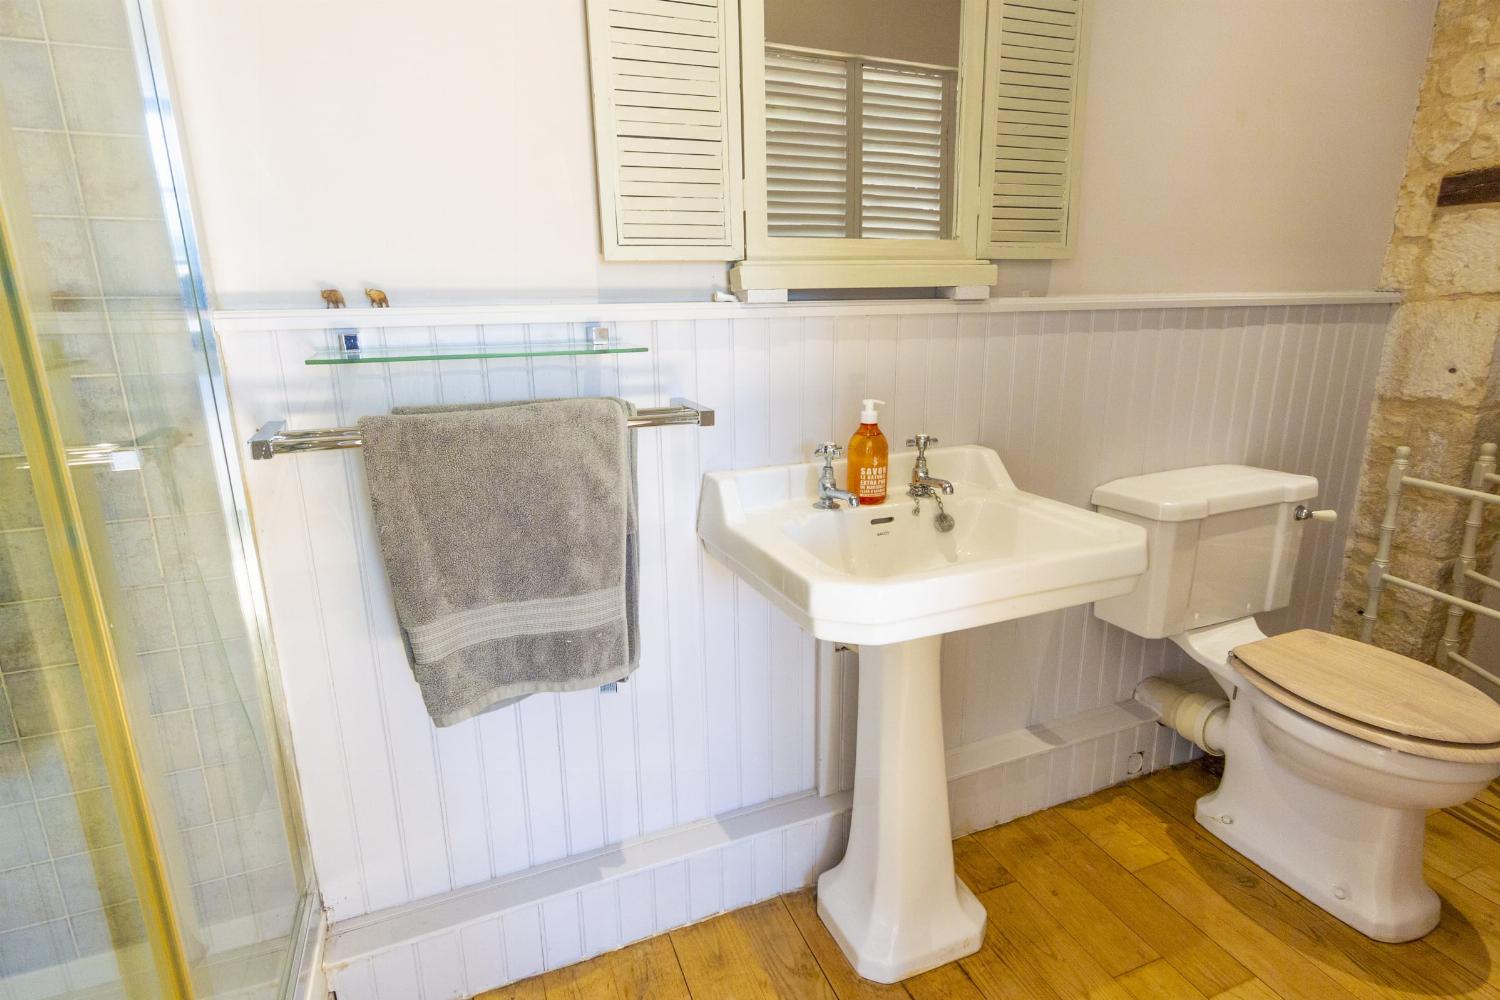 Salle de bain | Location de vacances en Charente